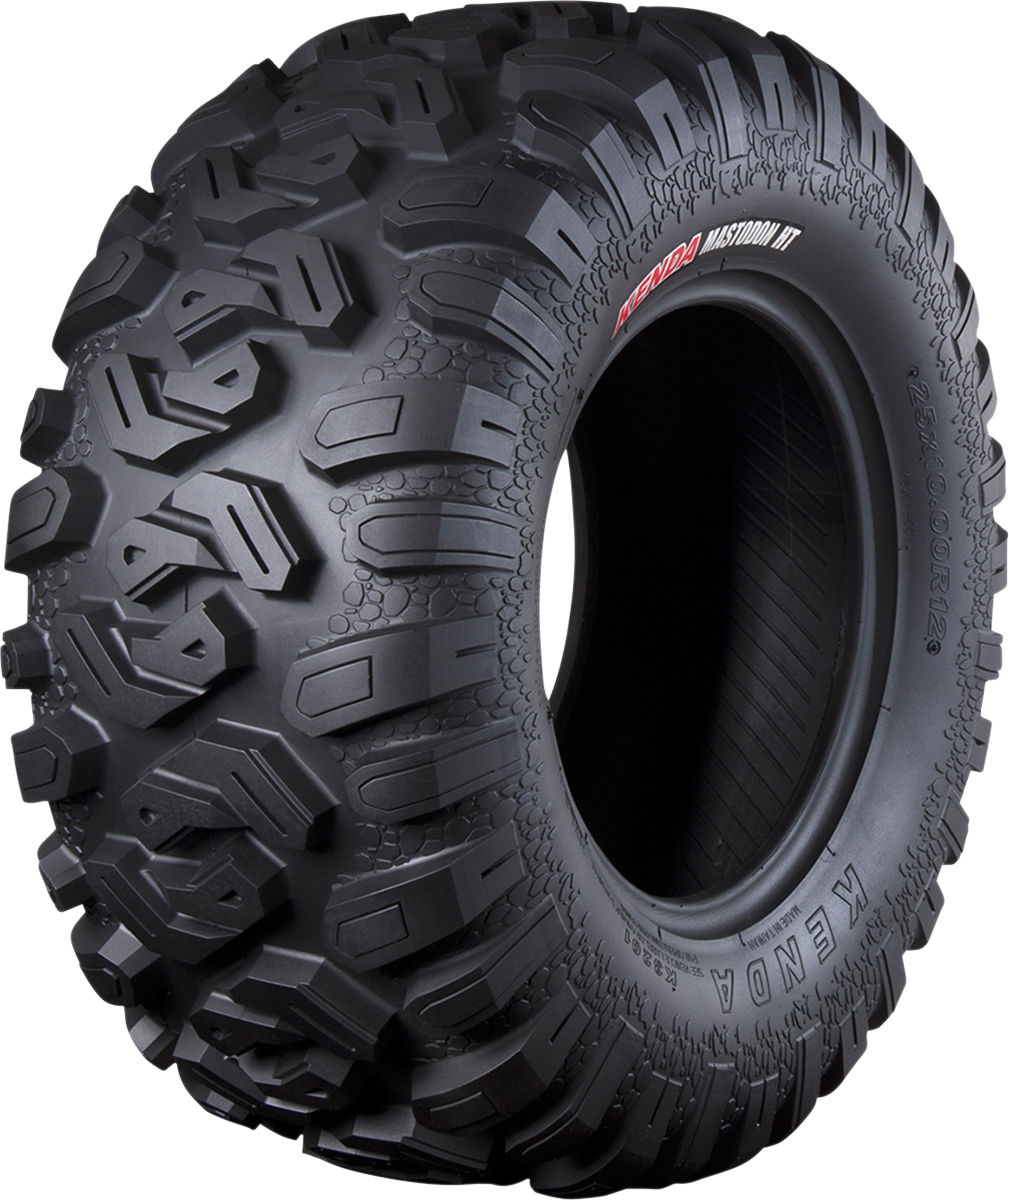 Tire - K3201 - Mastodon HT - 26x11R14